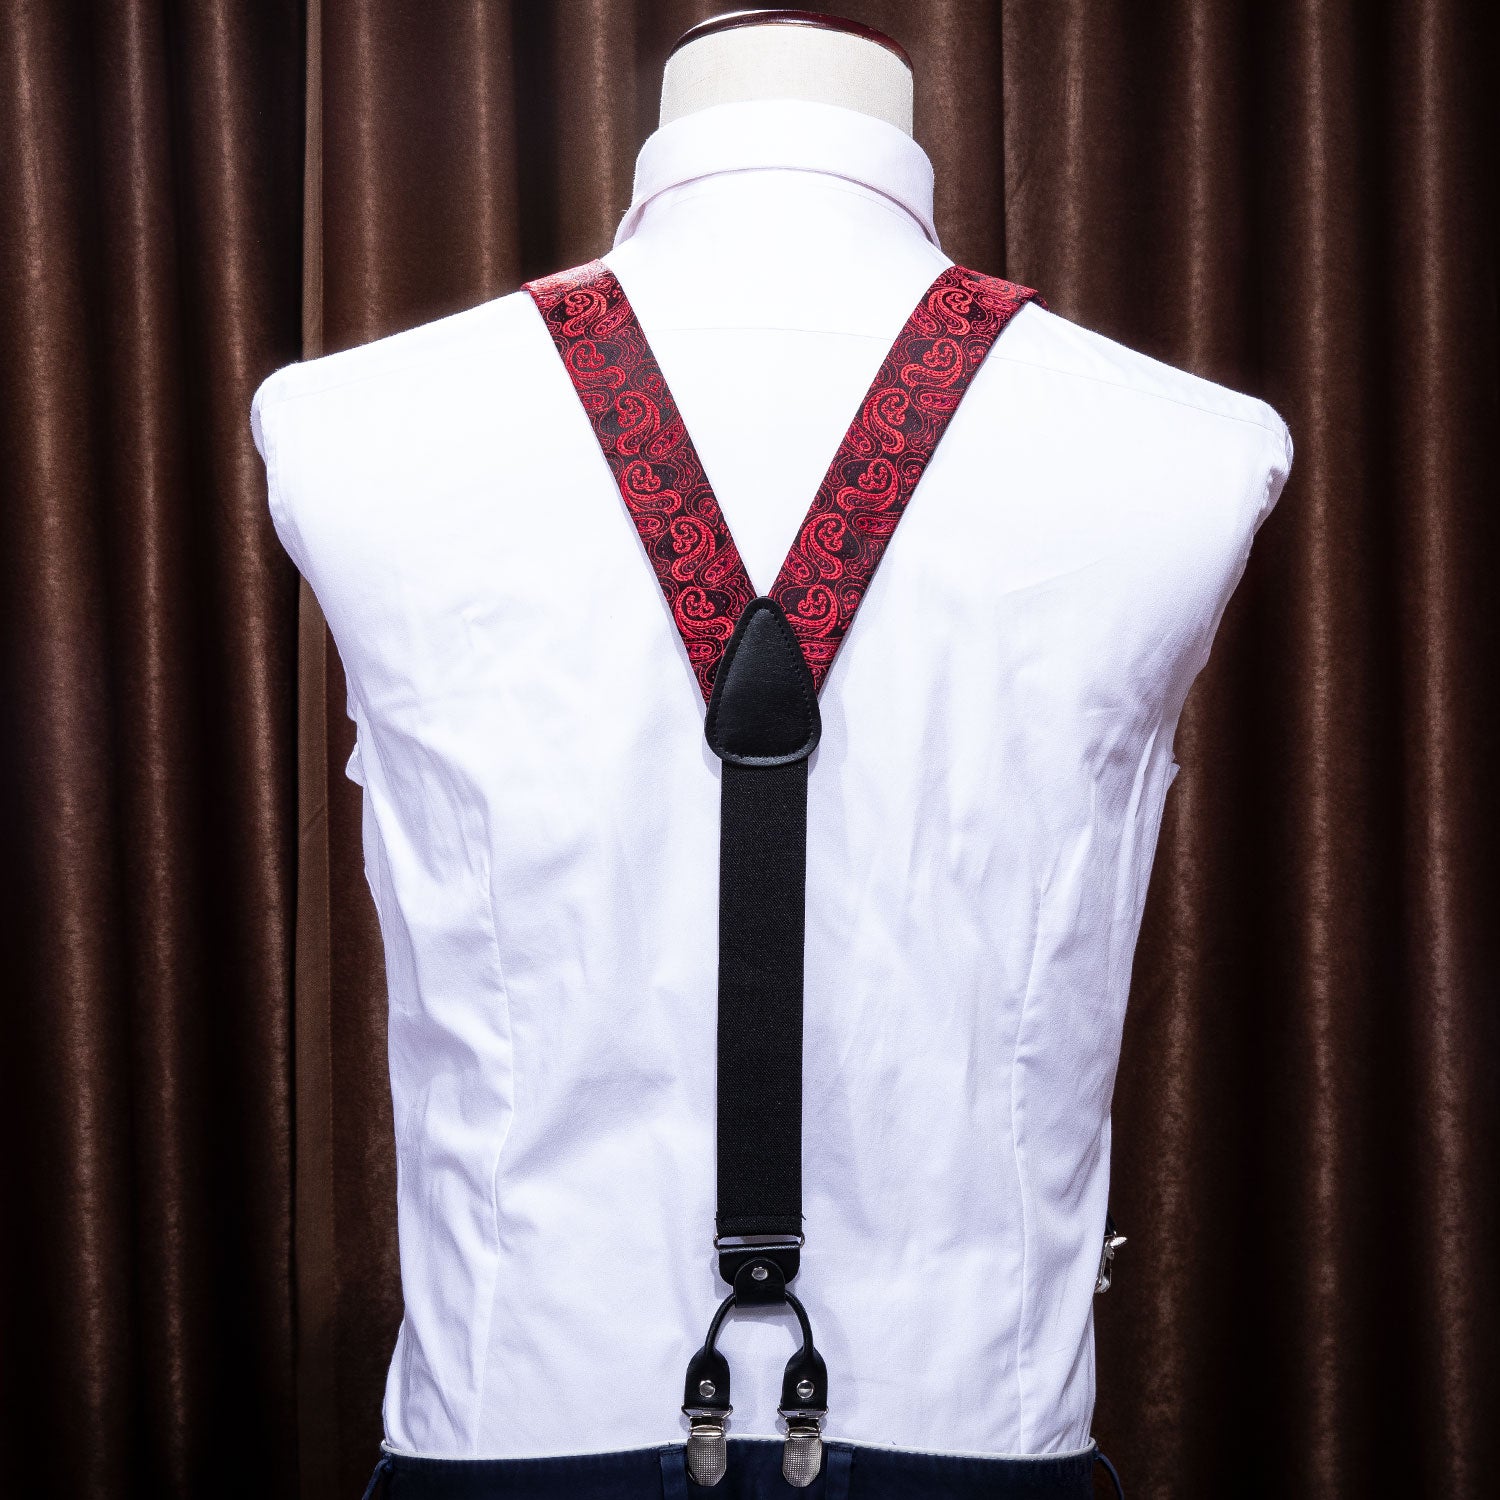 Red Floral Y Back Adjustable Bow Tie Suspenders Set